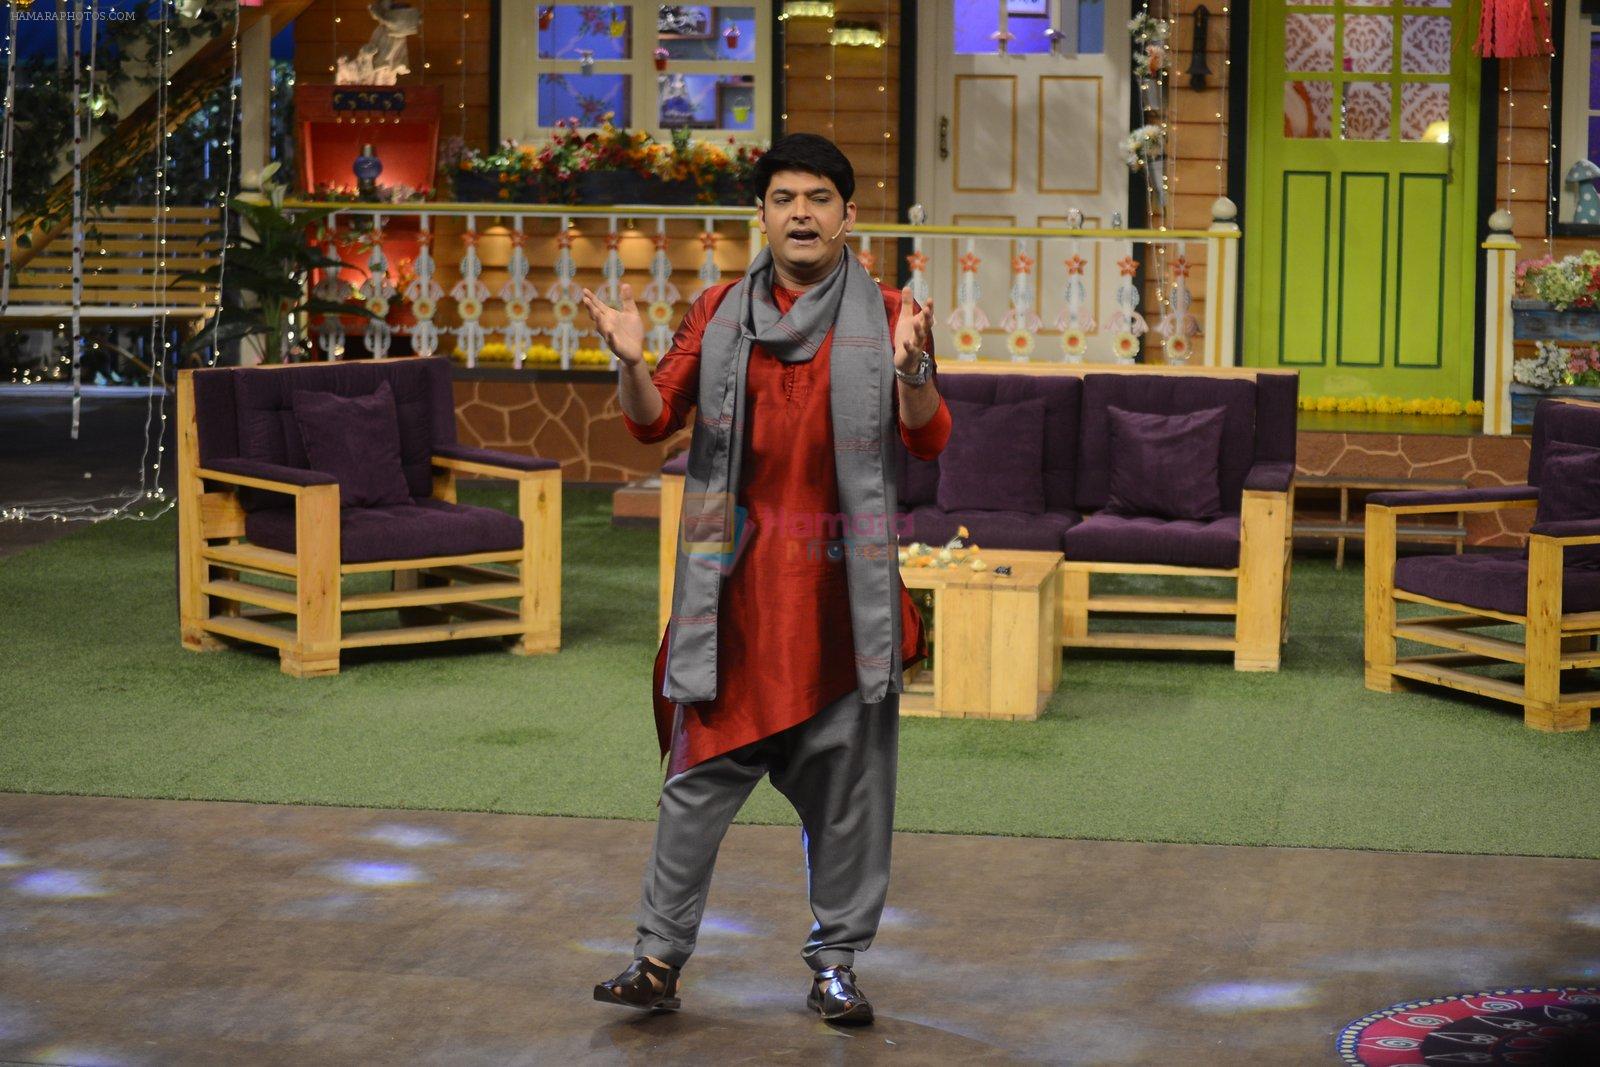 Kapil Sharma on the sets of The Kapil Sharma Show on 22nd Oct 2016